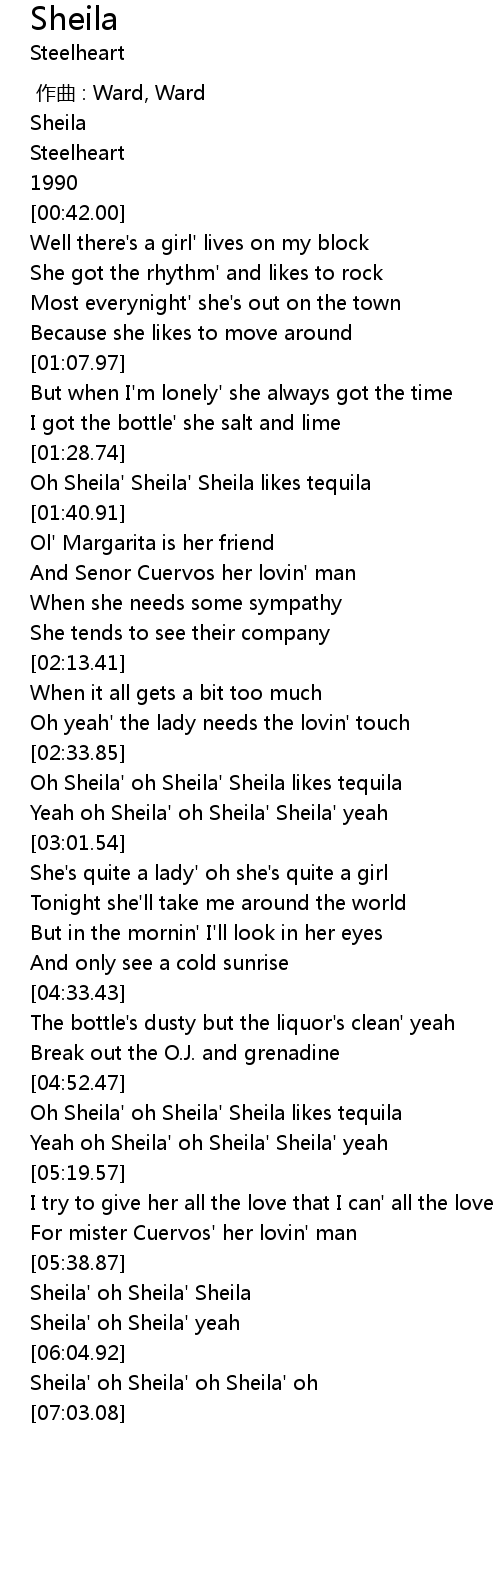 Tequila sheila likes Steelheart